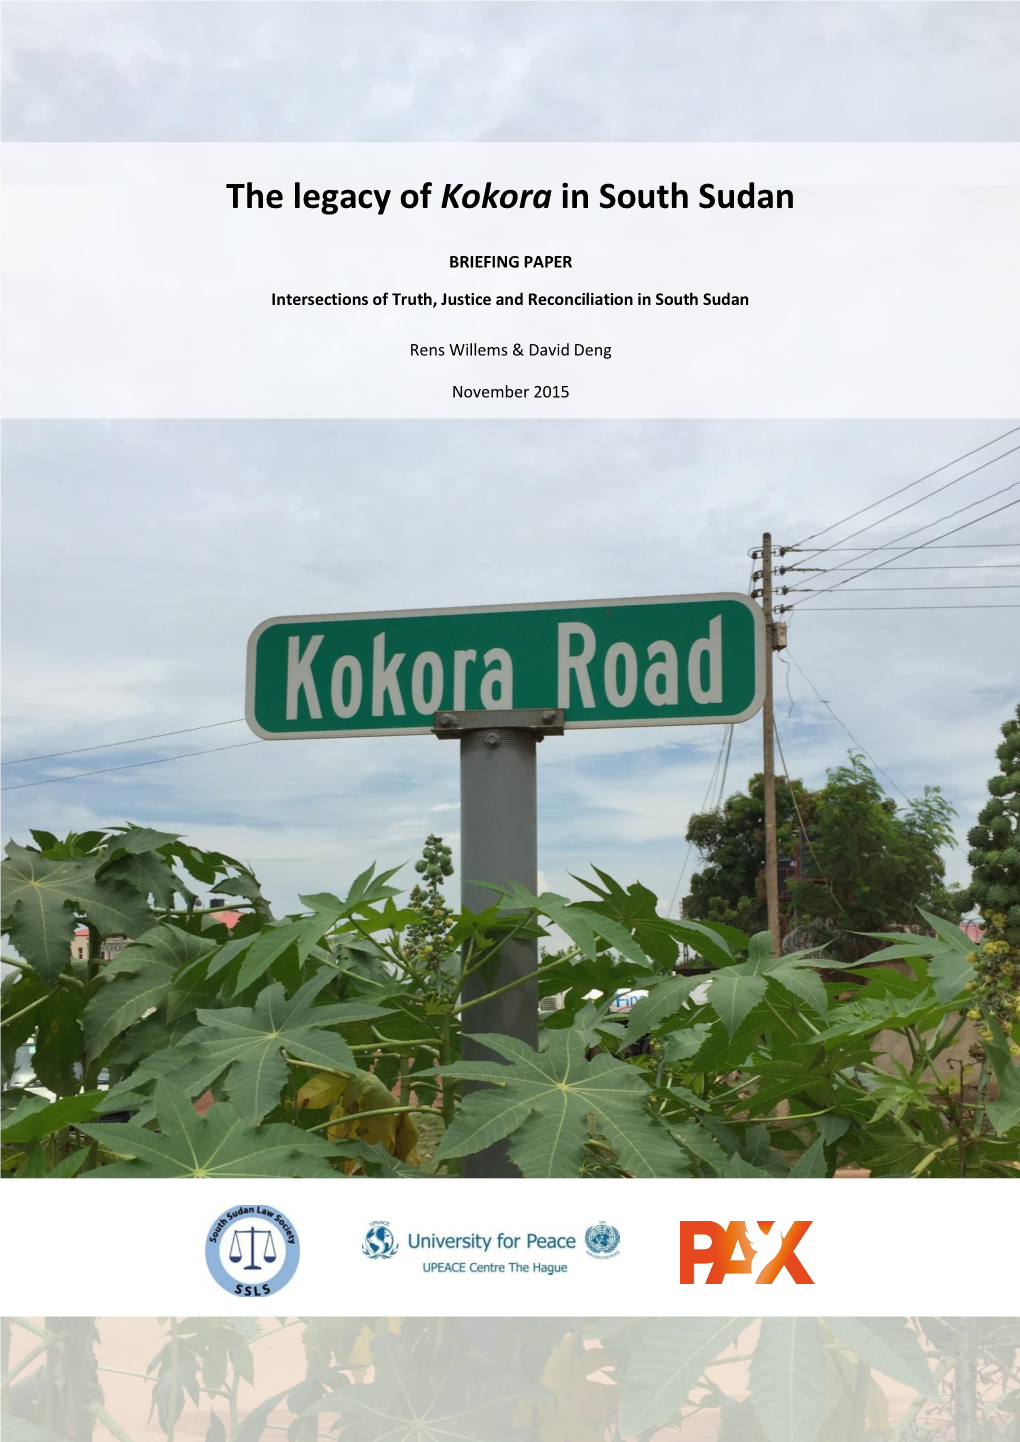 The Legacy of Kokora in South Sudan